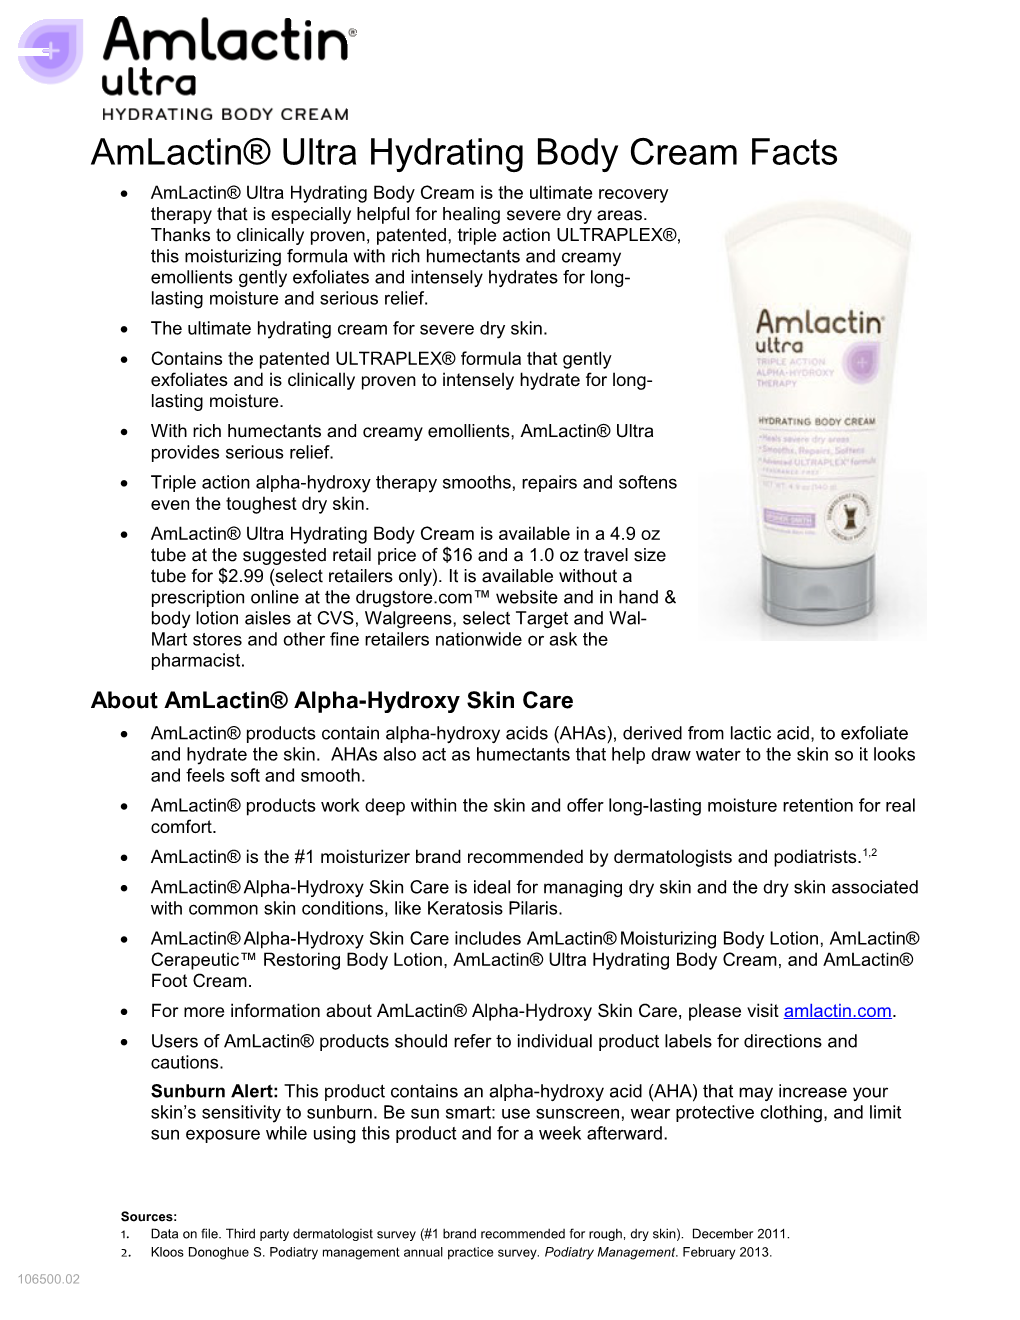 Amlactin Ultra Hydrating Body Cream Facts